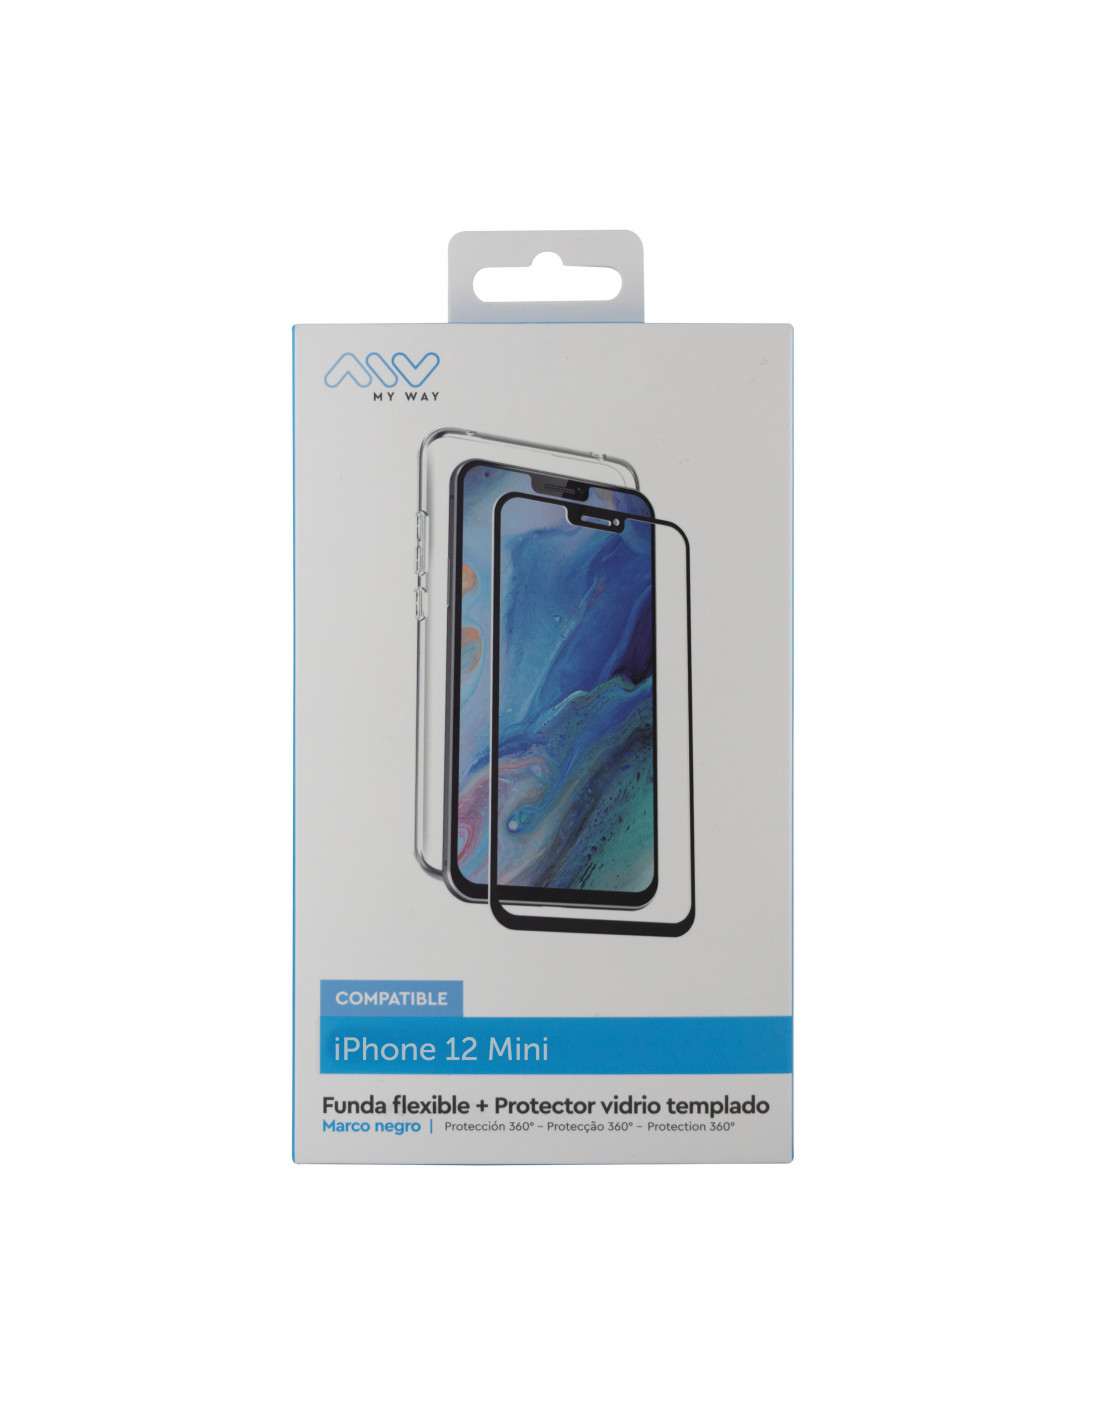 Protector pantalla móvil - iPhone 12 Mini CONTACT, Apple, iPhone 12 Mini,  Vidrio templado